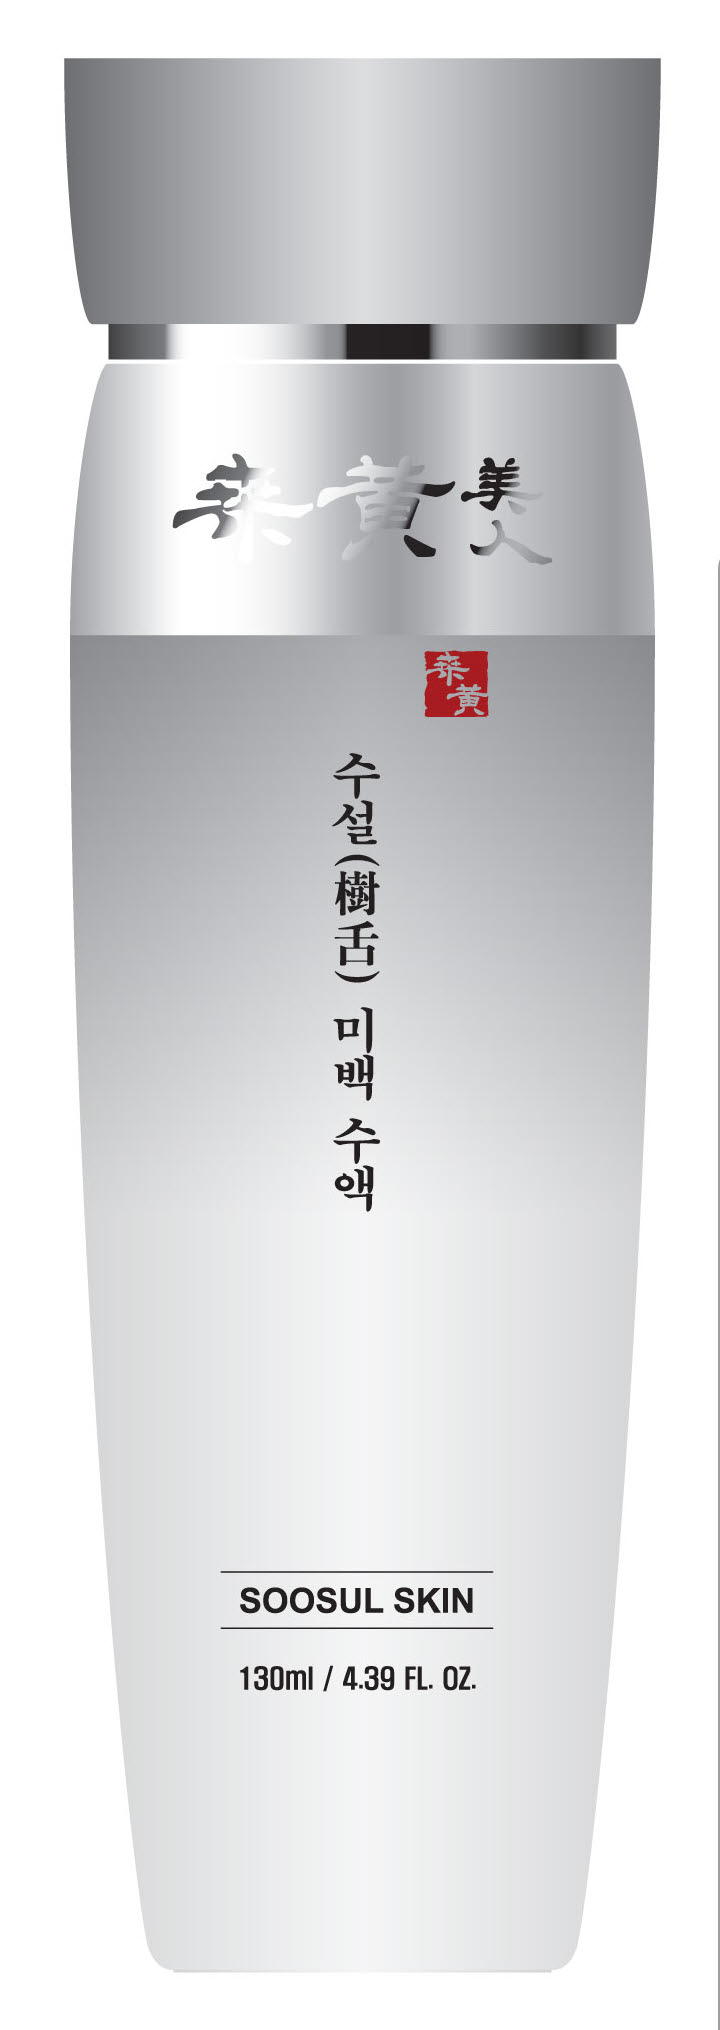 Soosul whitening toner Made in Korea